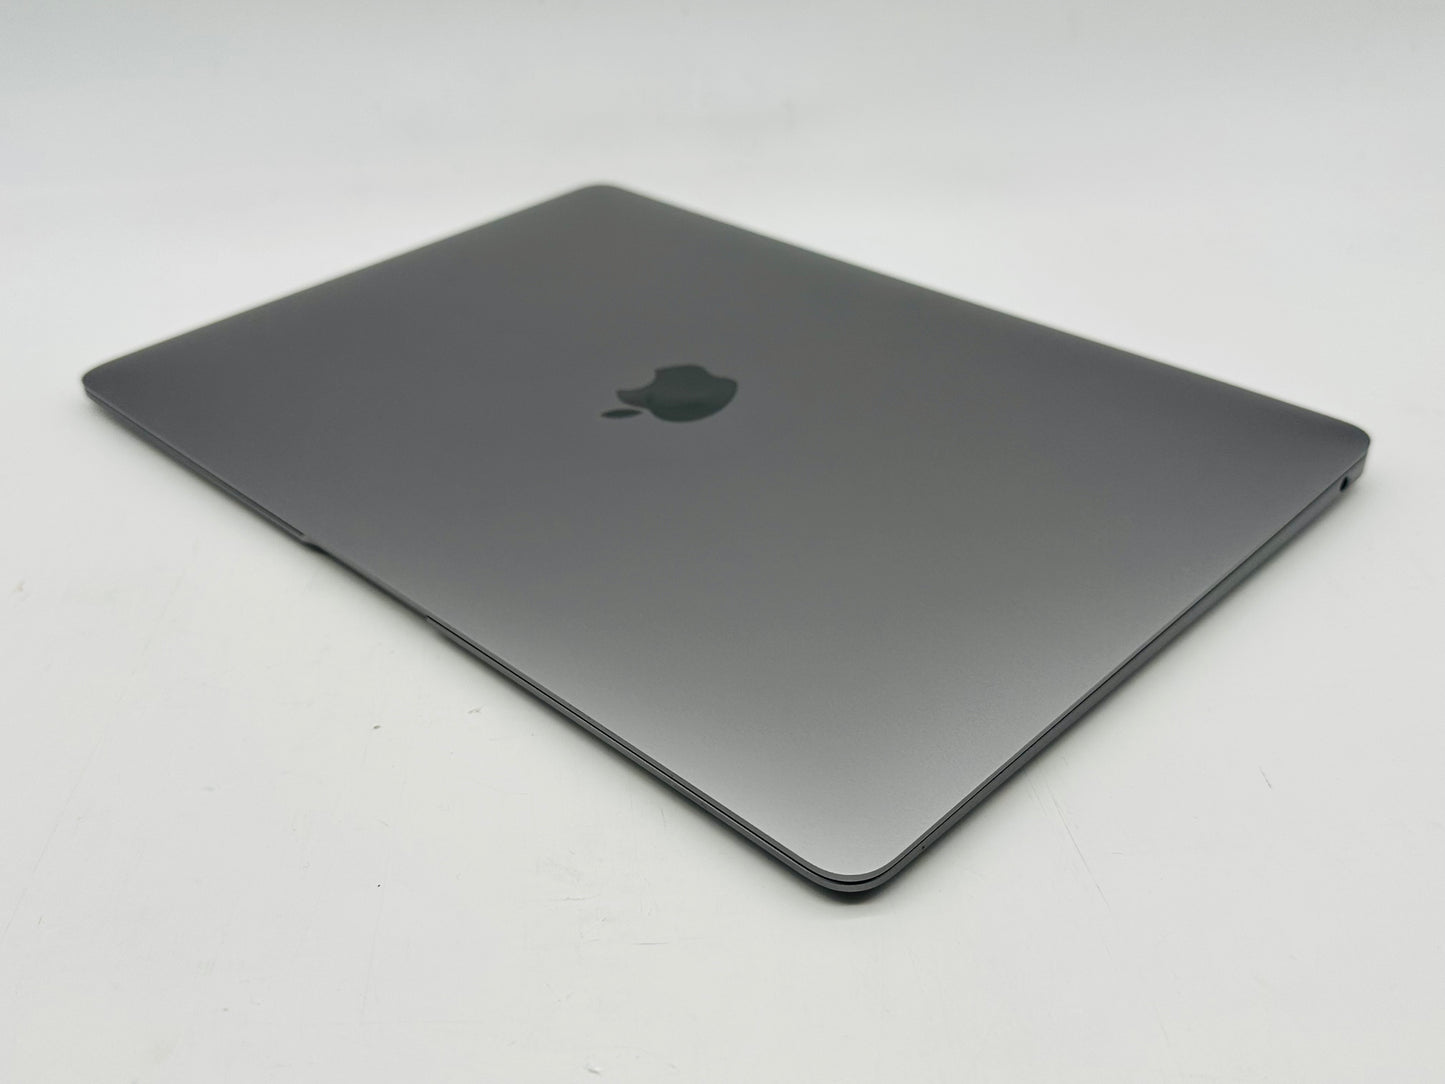 Apple 2019 MacBook Air 1.6GHz Dual-Core i5 8GB RAM 256GB SSD IUG617